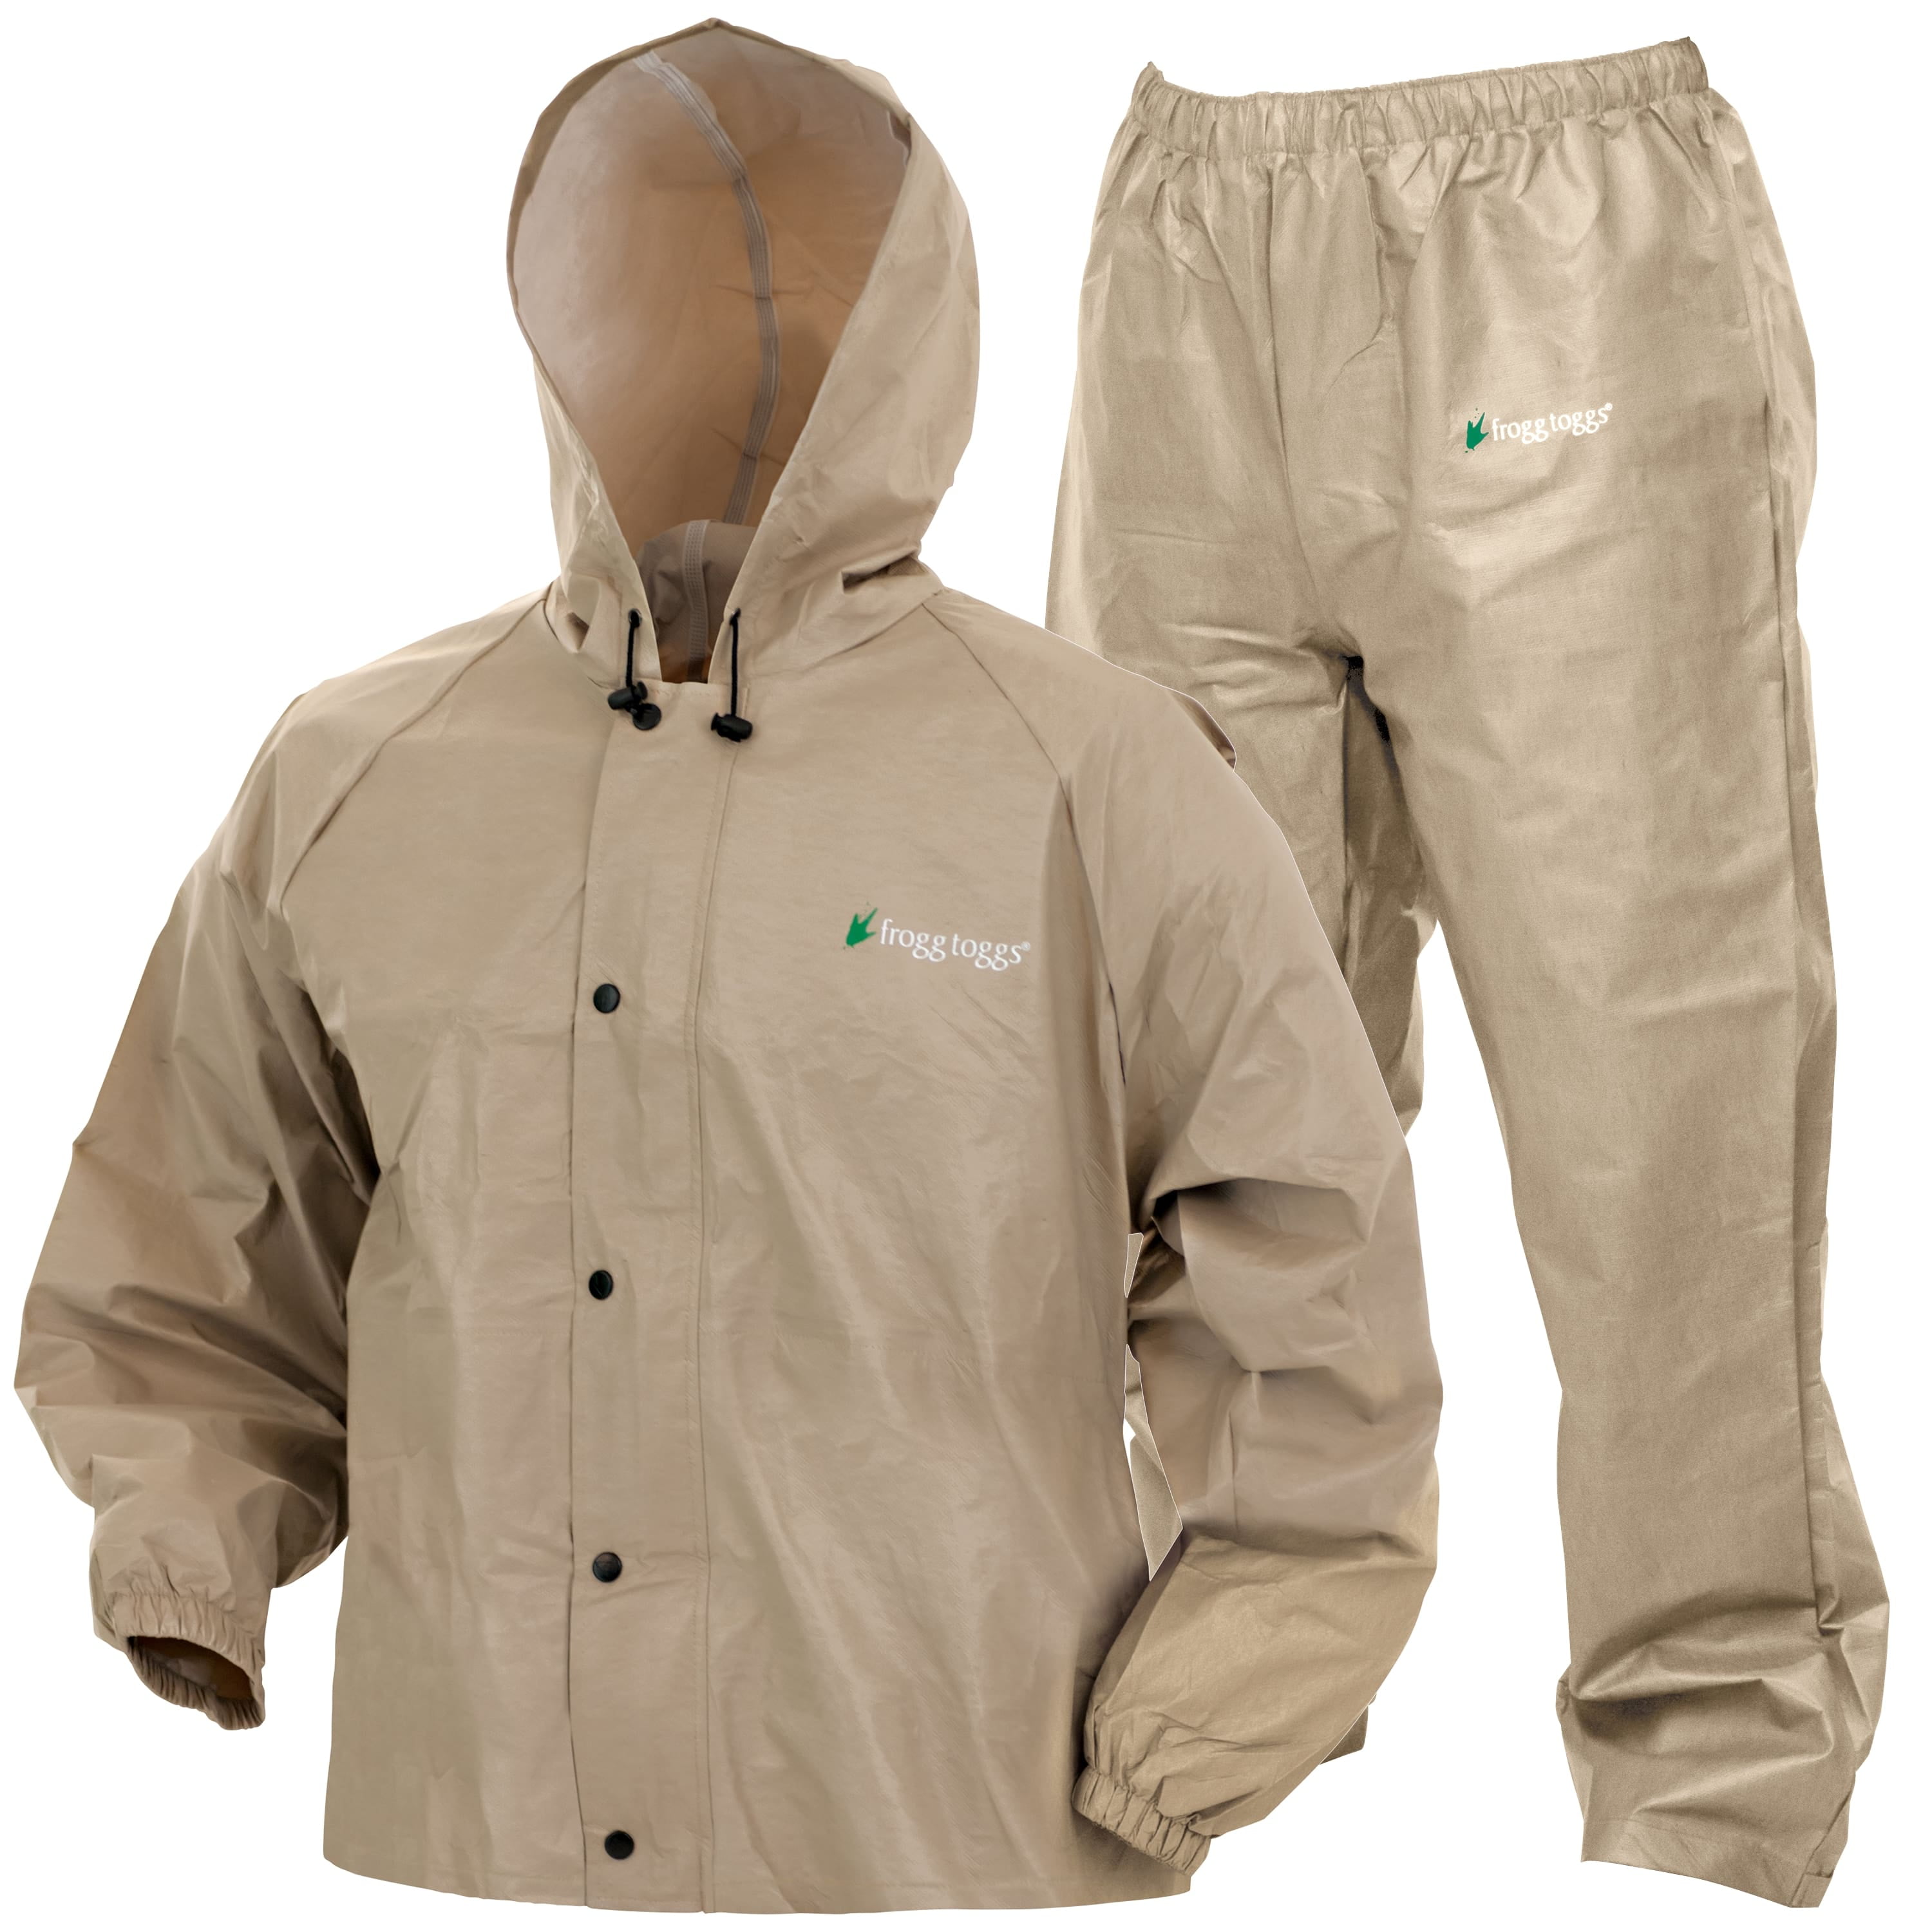 Frogg Toggs Men's Pro Lite Suit | Khaki | Size MD/LG - Walmart.com